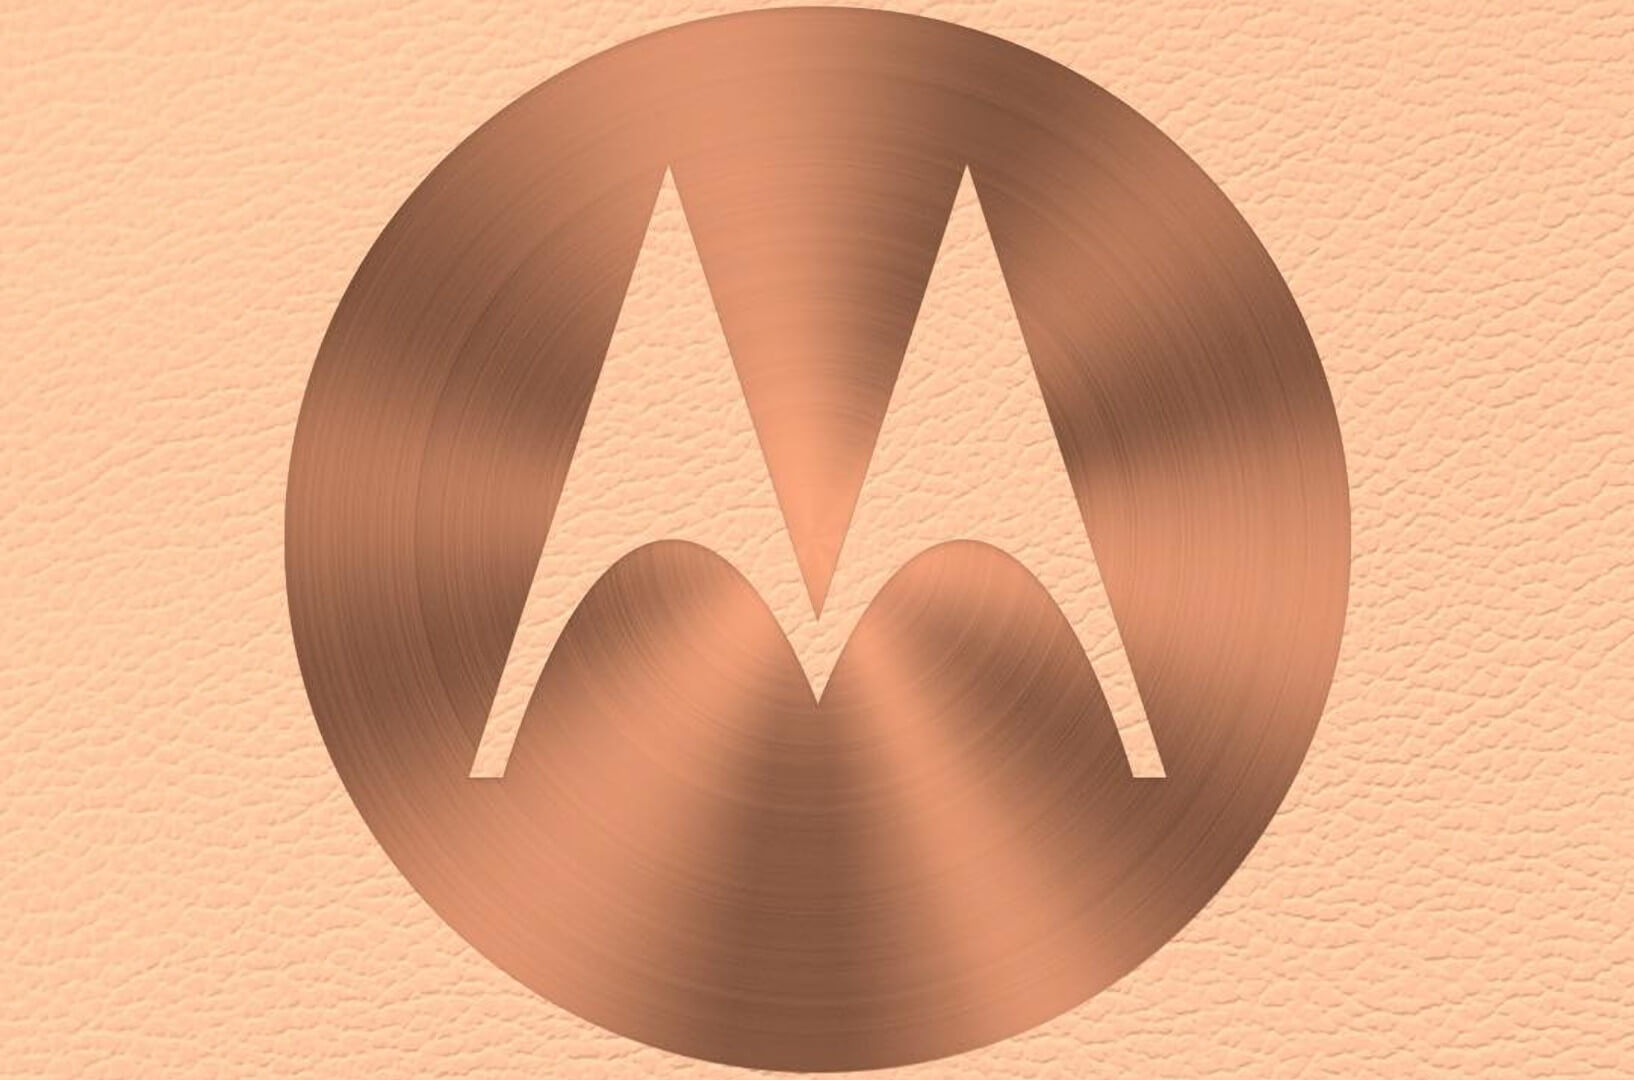 A bronze Motorola logo against a textured background